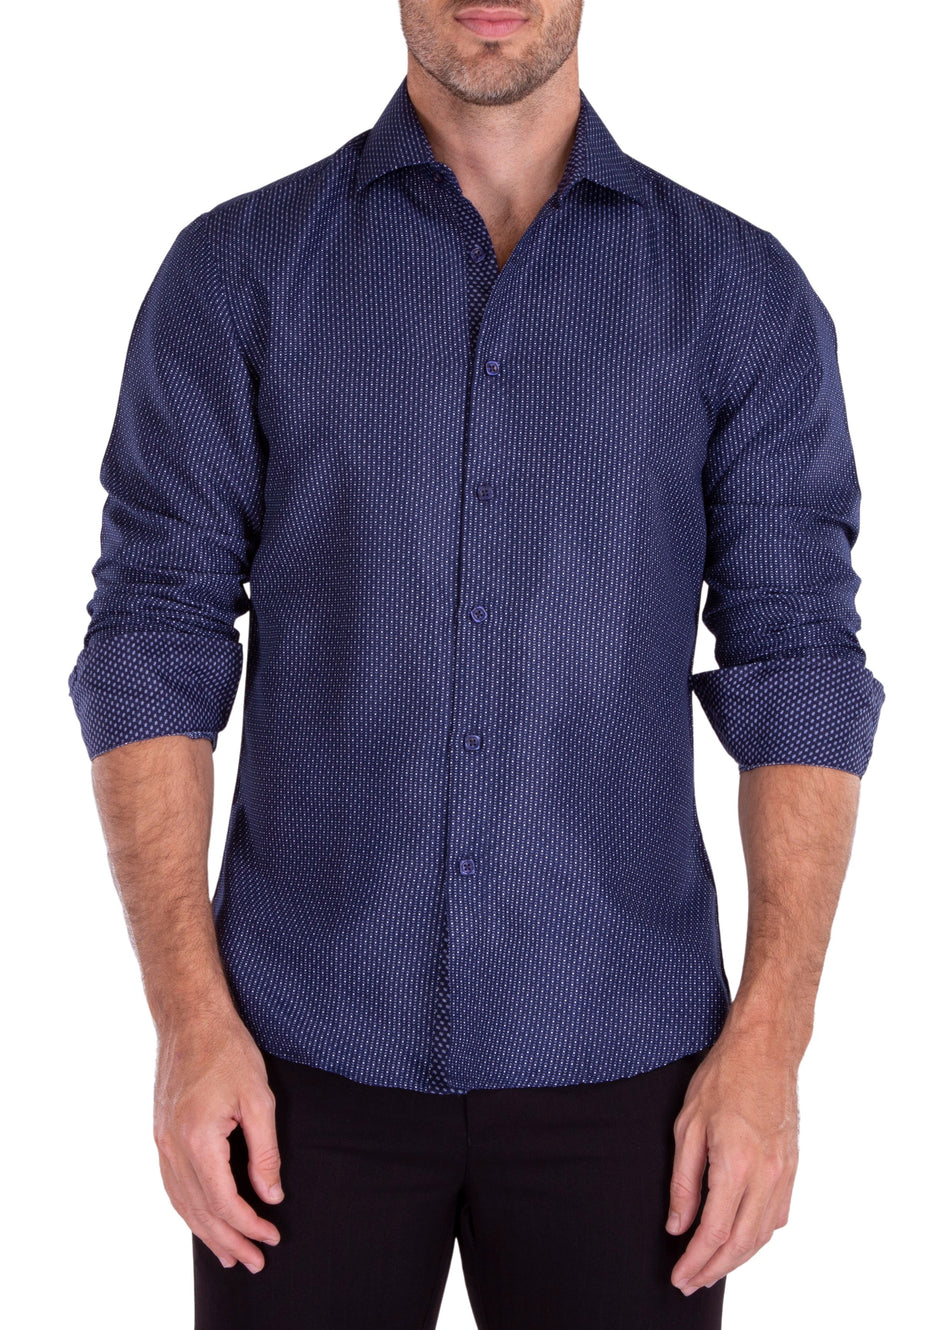 212386 - Navy Long Sleeve Shirt